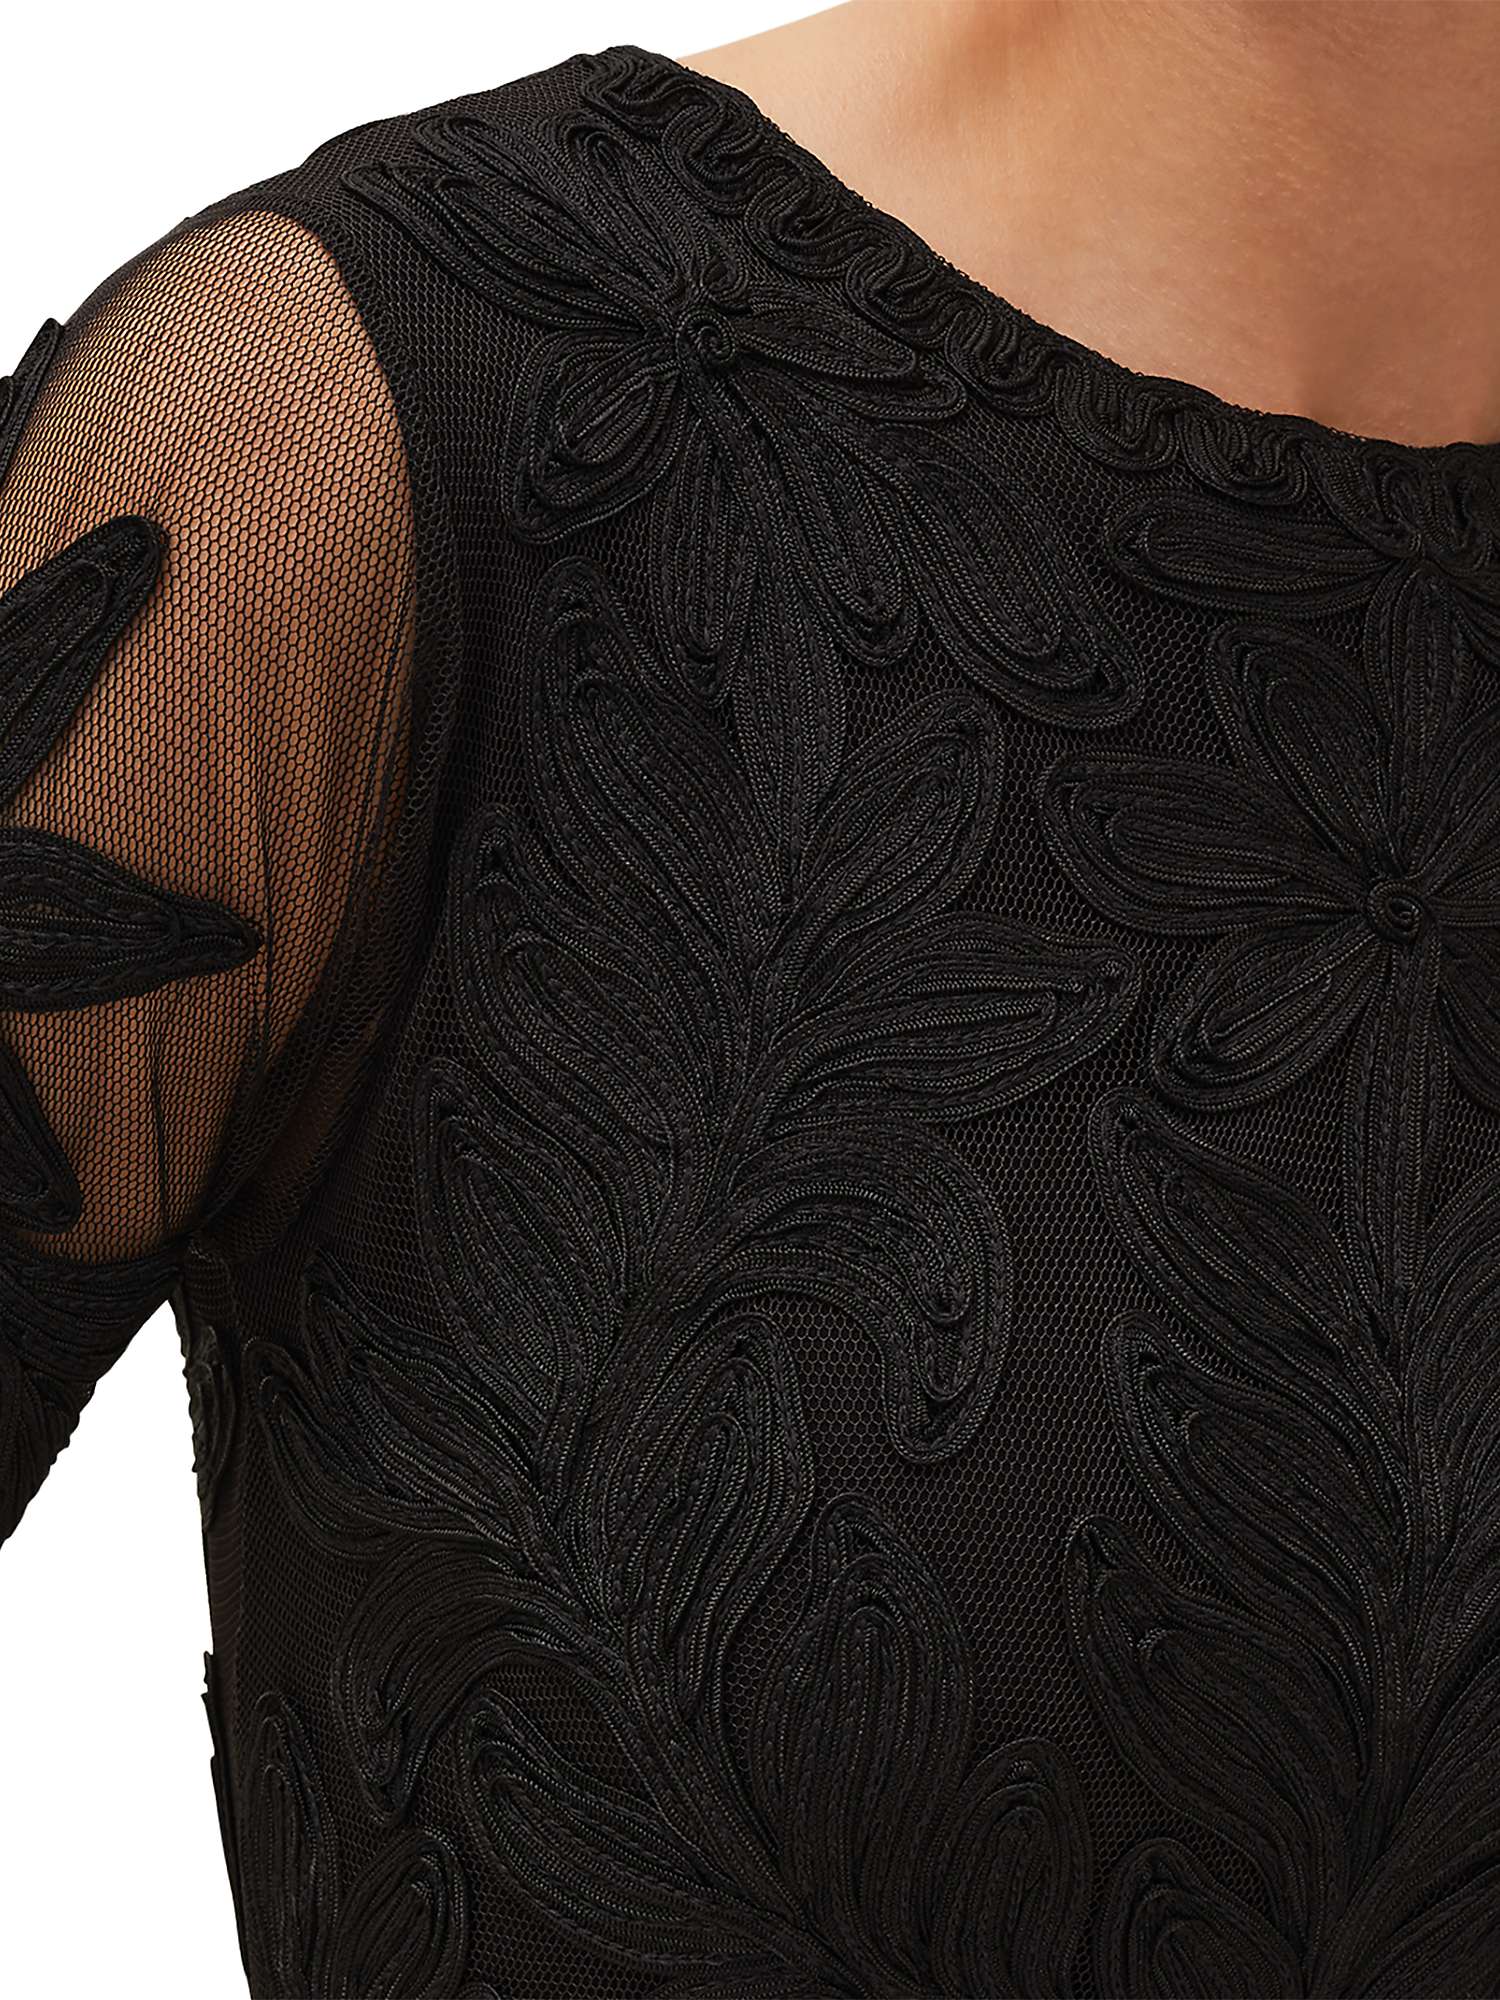 Buy Phase Eight Isobel Tapework Detail Dress, Black Online at johnlewis.com